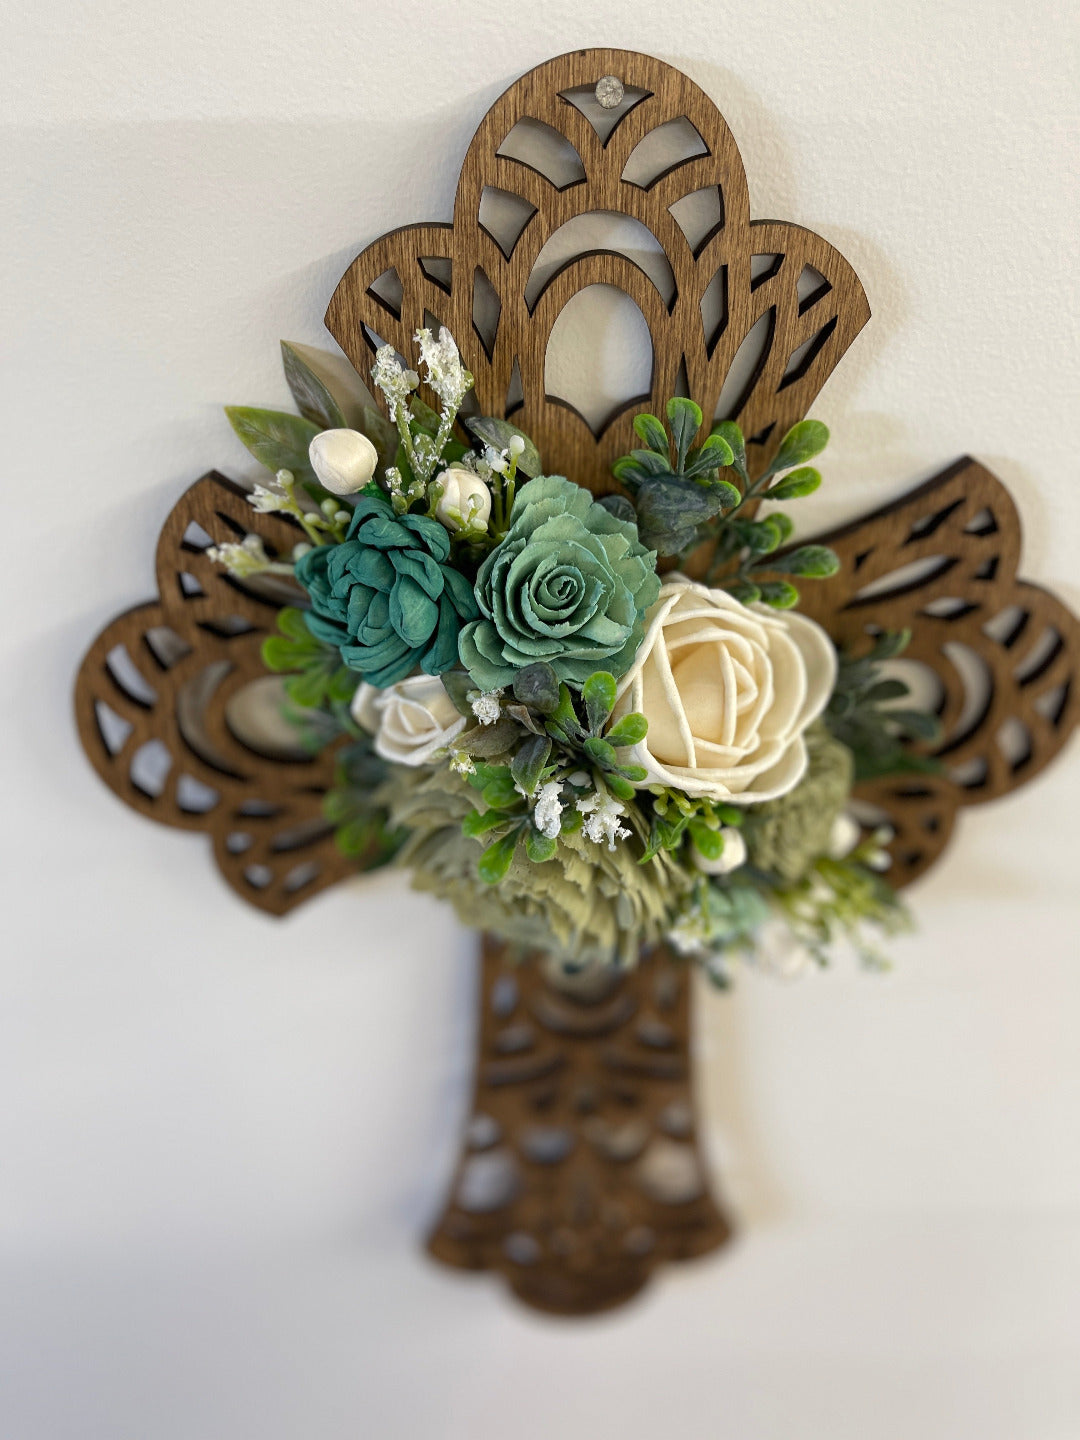 16 inch Ornate Cross - Custom Florals